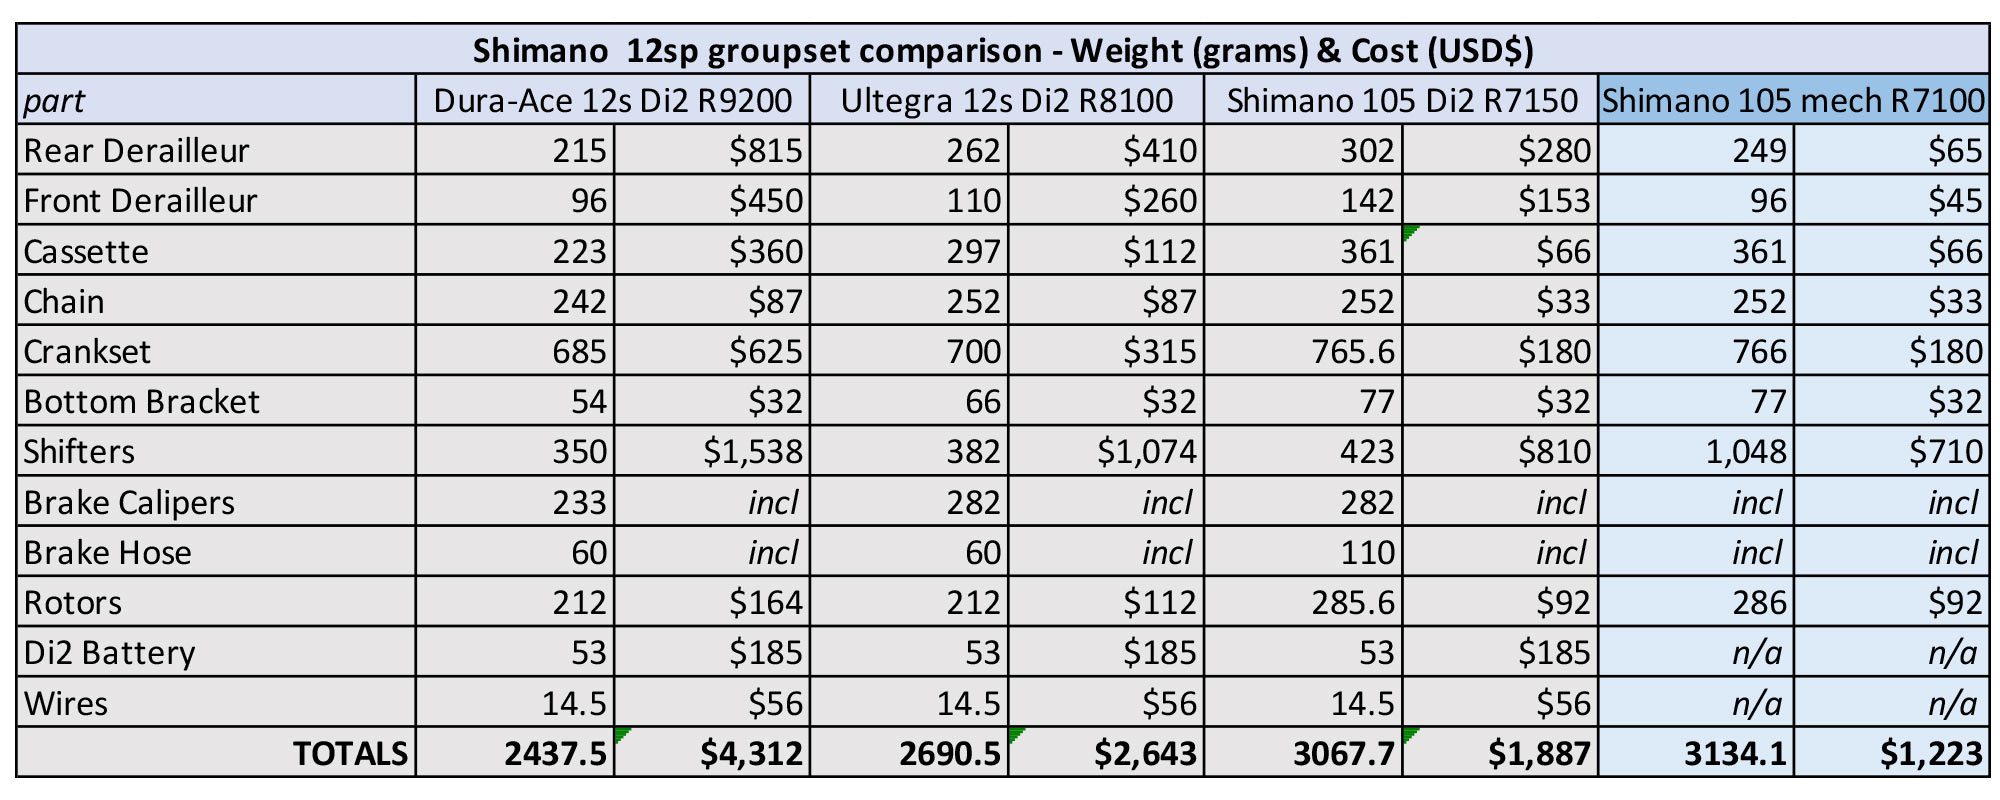 Shimano 105 R7100 mechanical 12-speed road bike groupset, Price & Weight vs. Di2